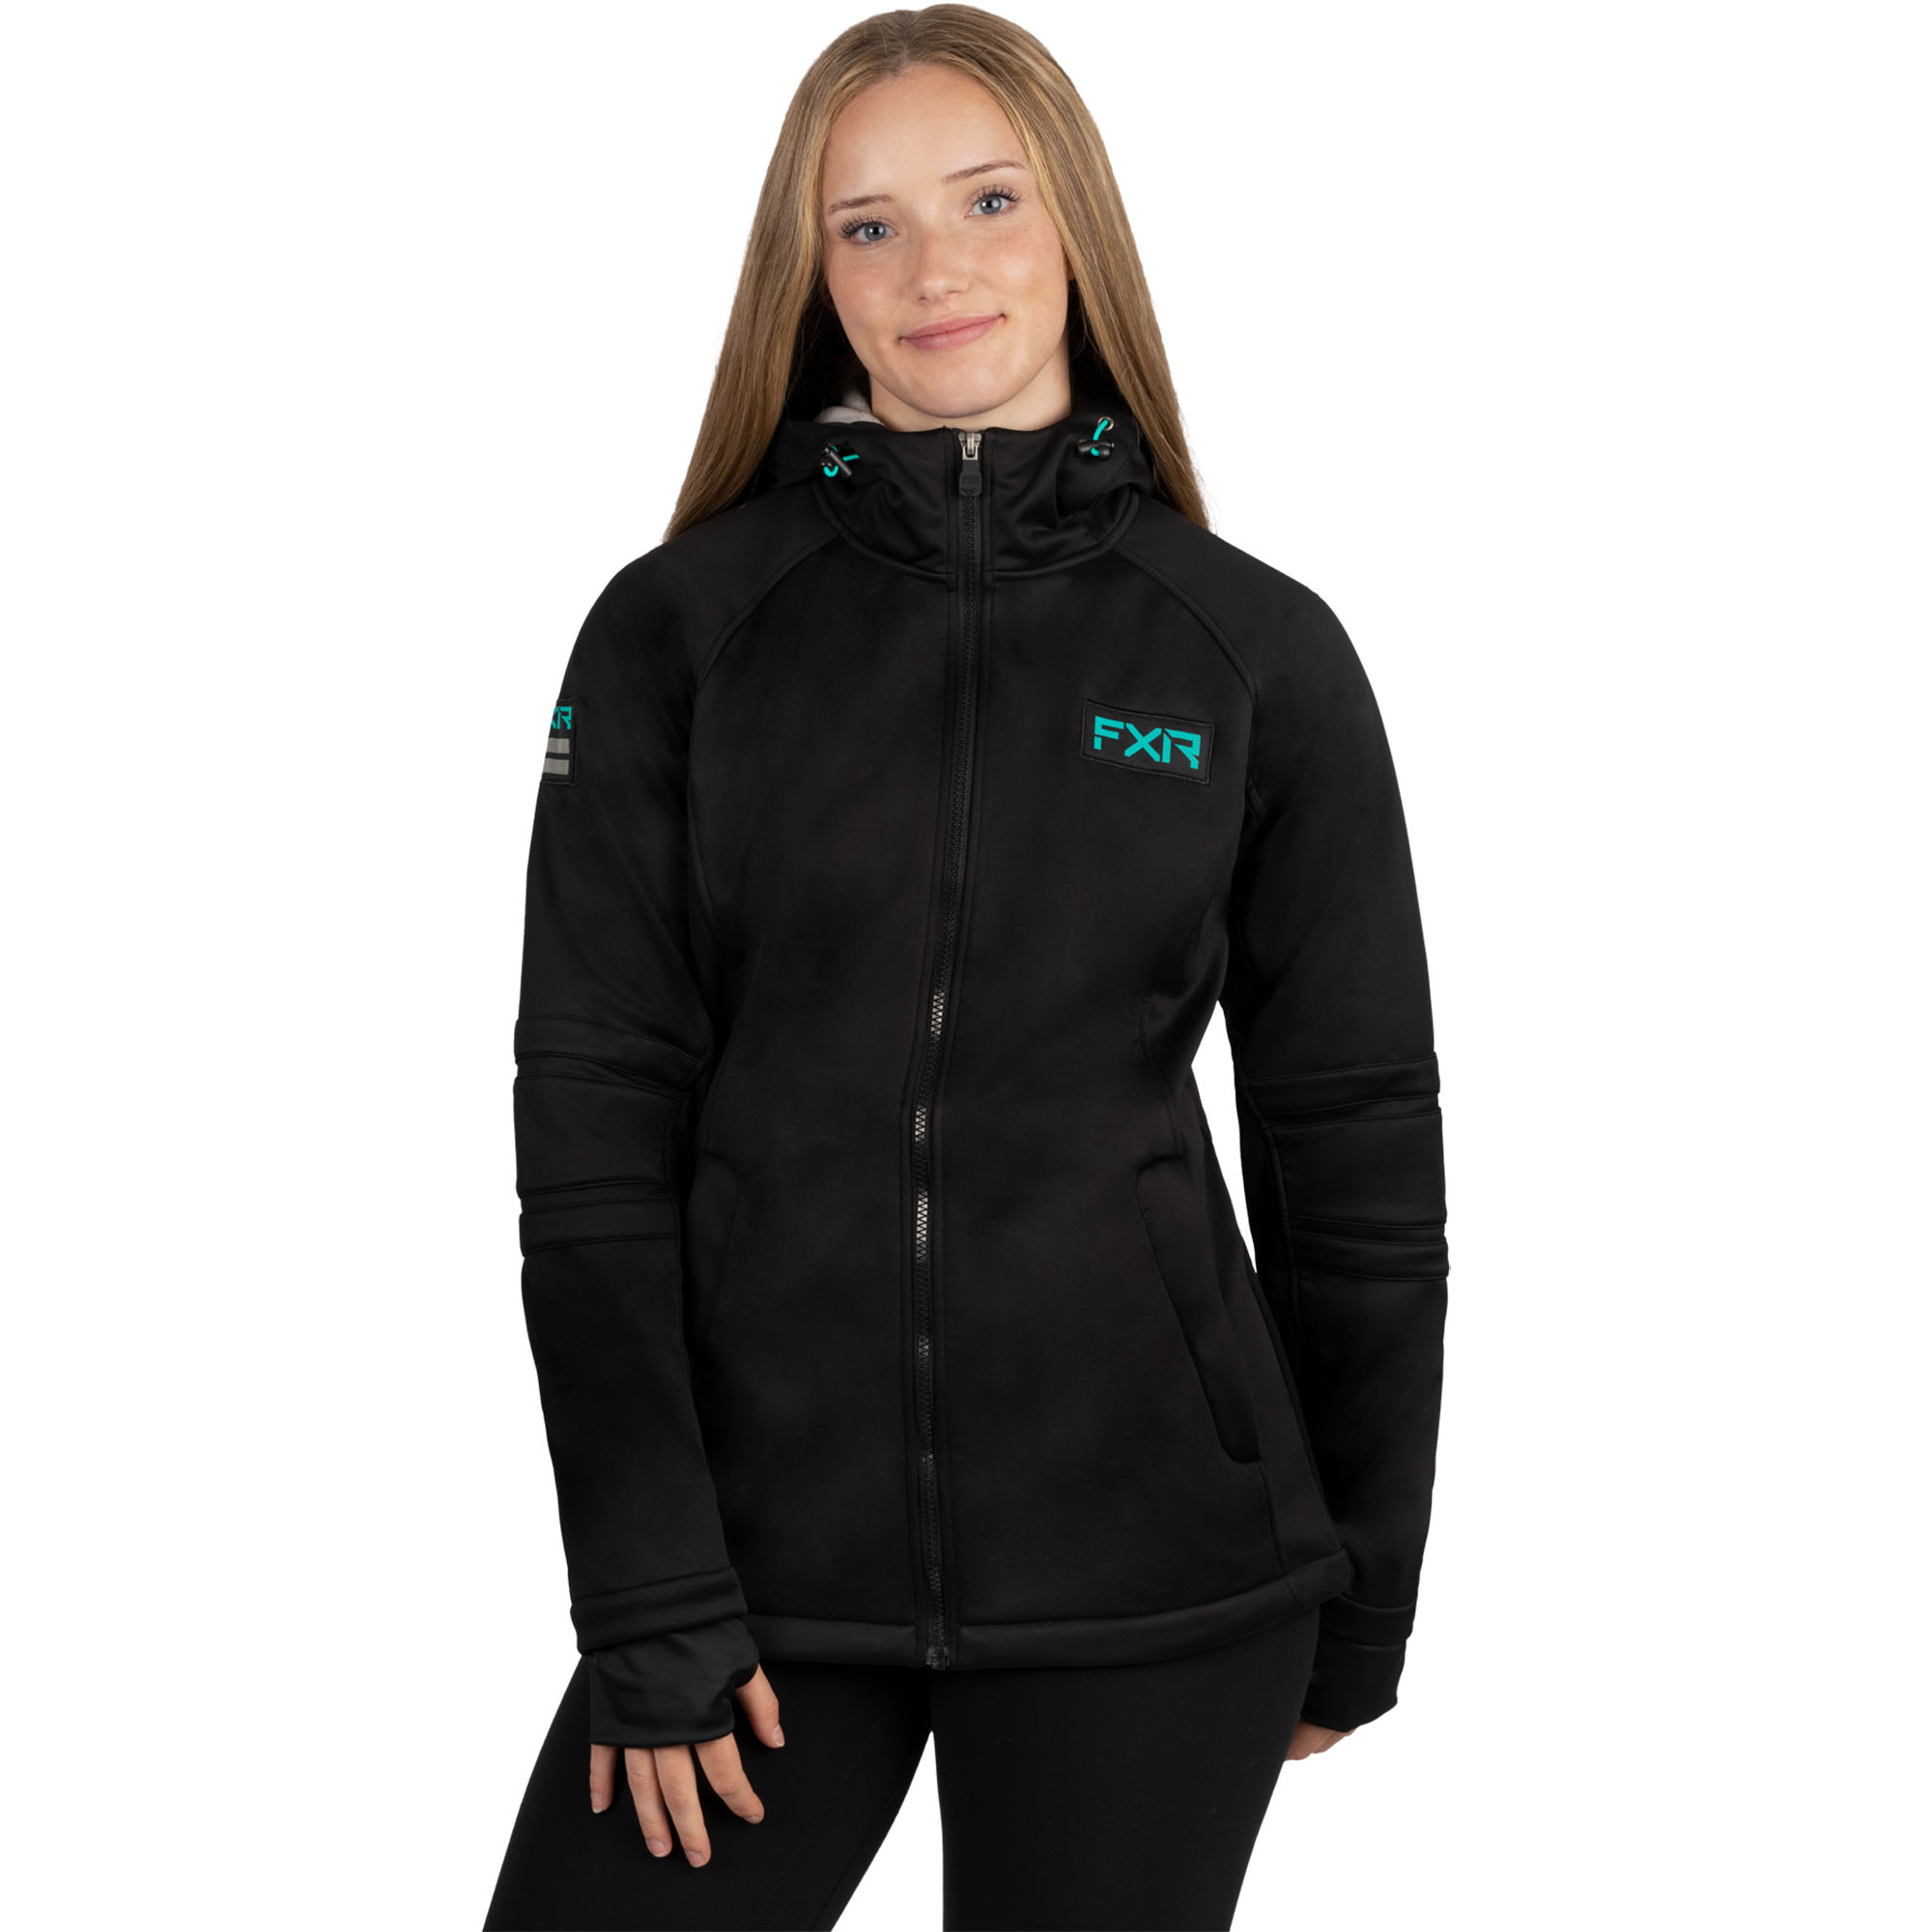 FXR  Womens Maverick Softshell Jacket Black Mint DWR HydrX Waterproof Thermal - Medium 231006-1052-10 - image 1 of 1